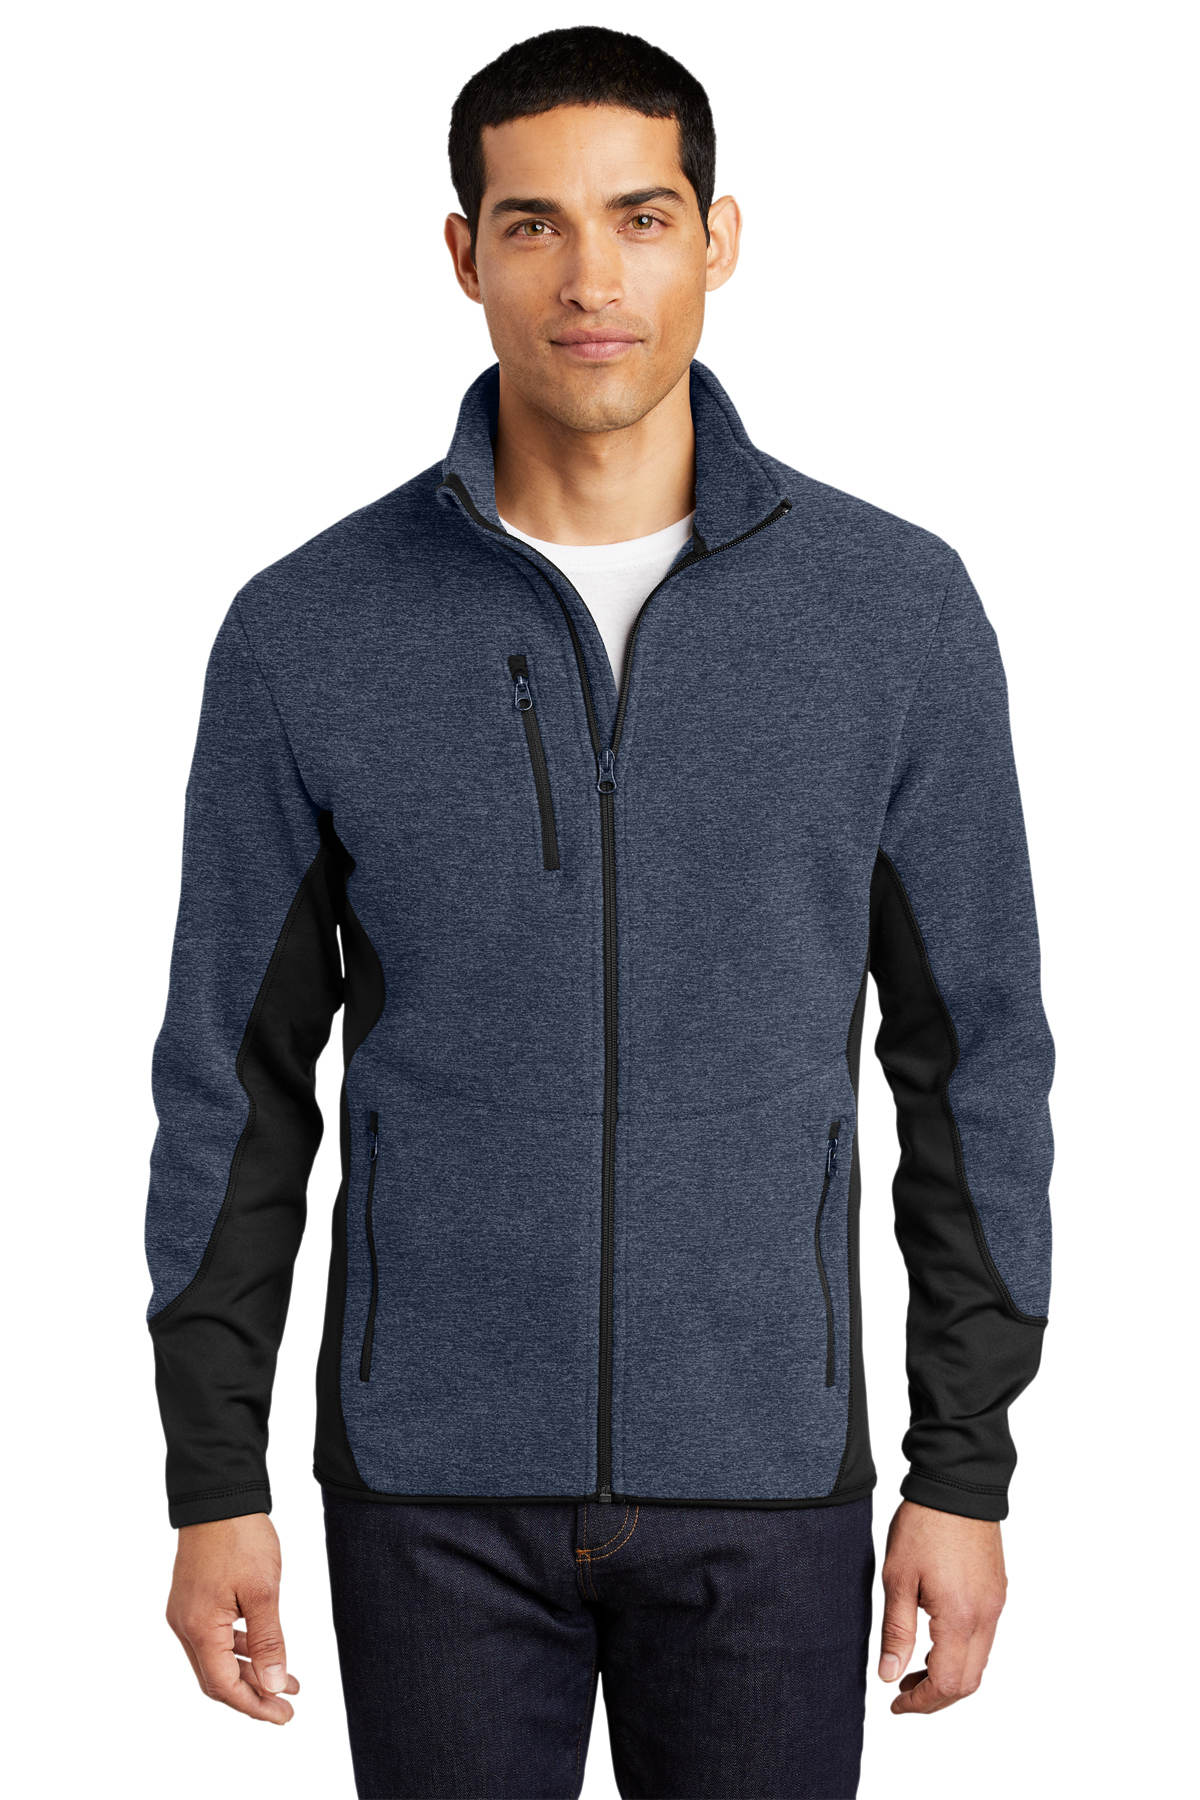 Port Authority R-Tek Pro Fleece Full-Zip Jacket | Product | SanMar